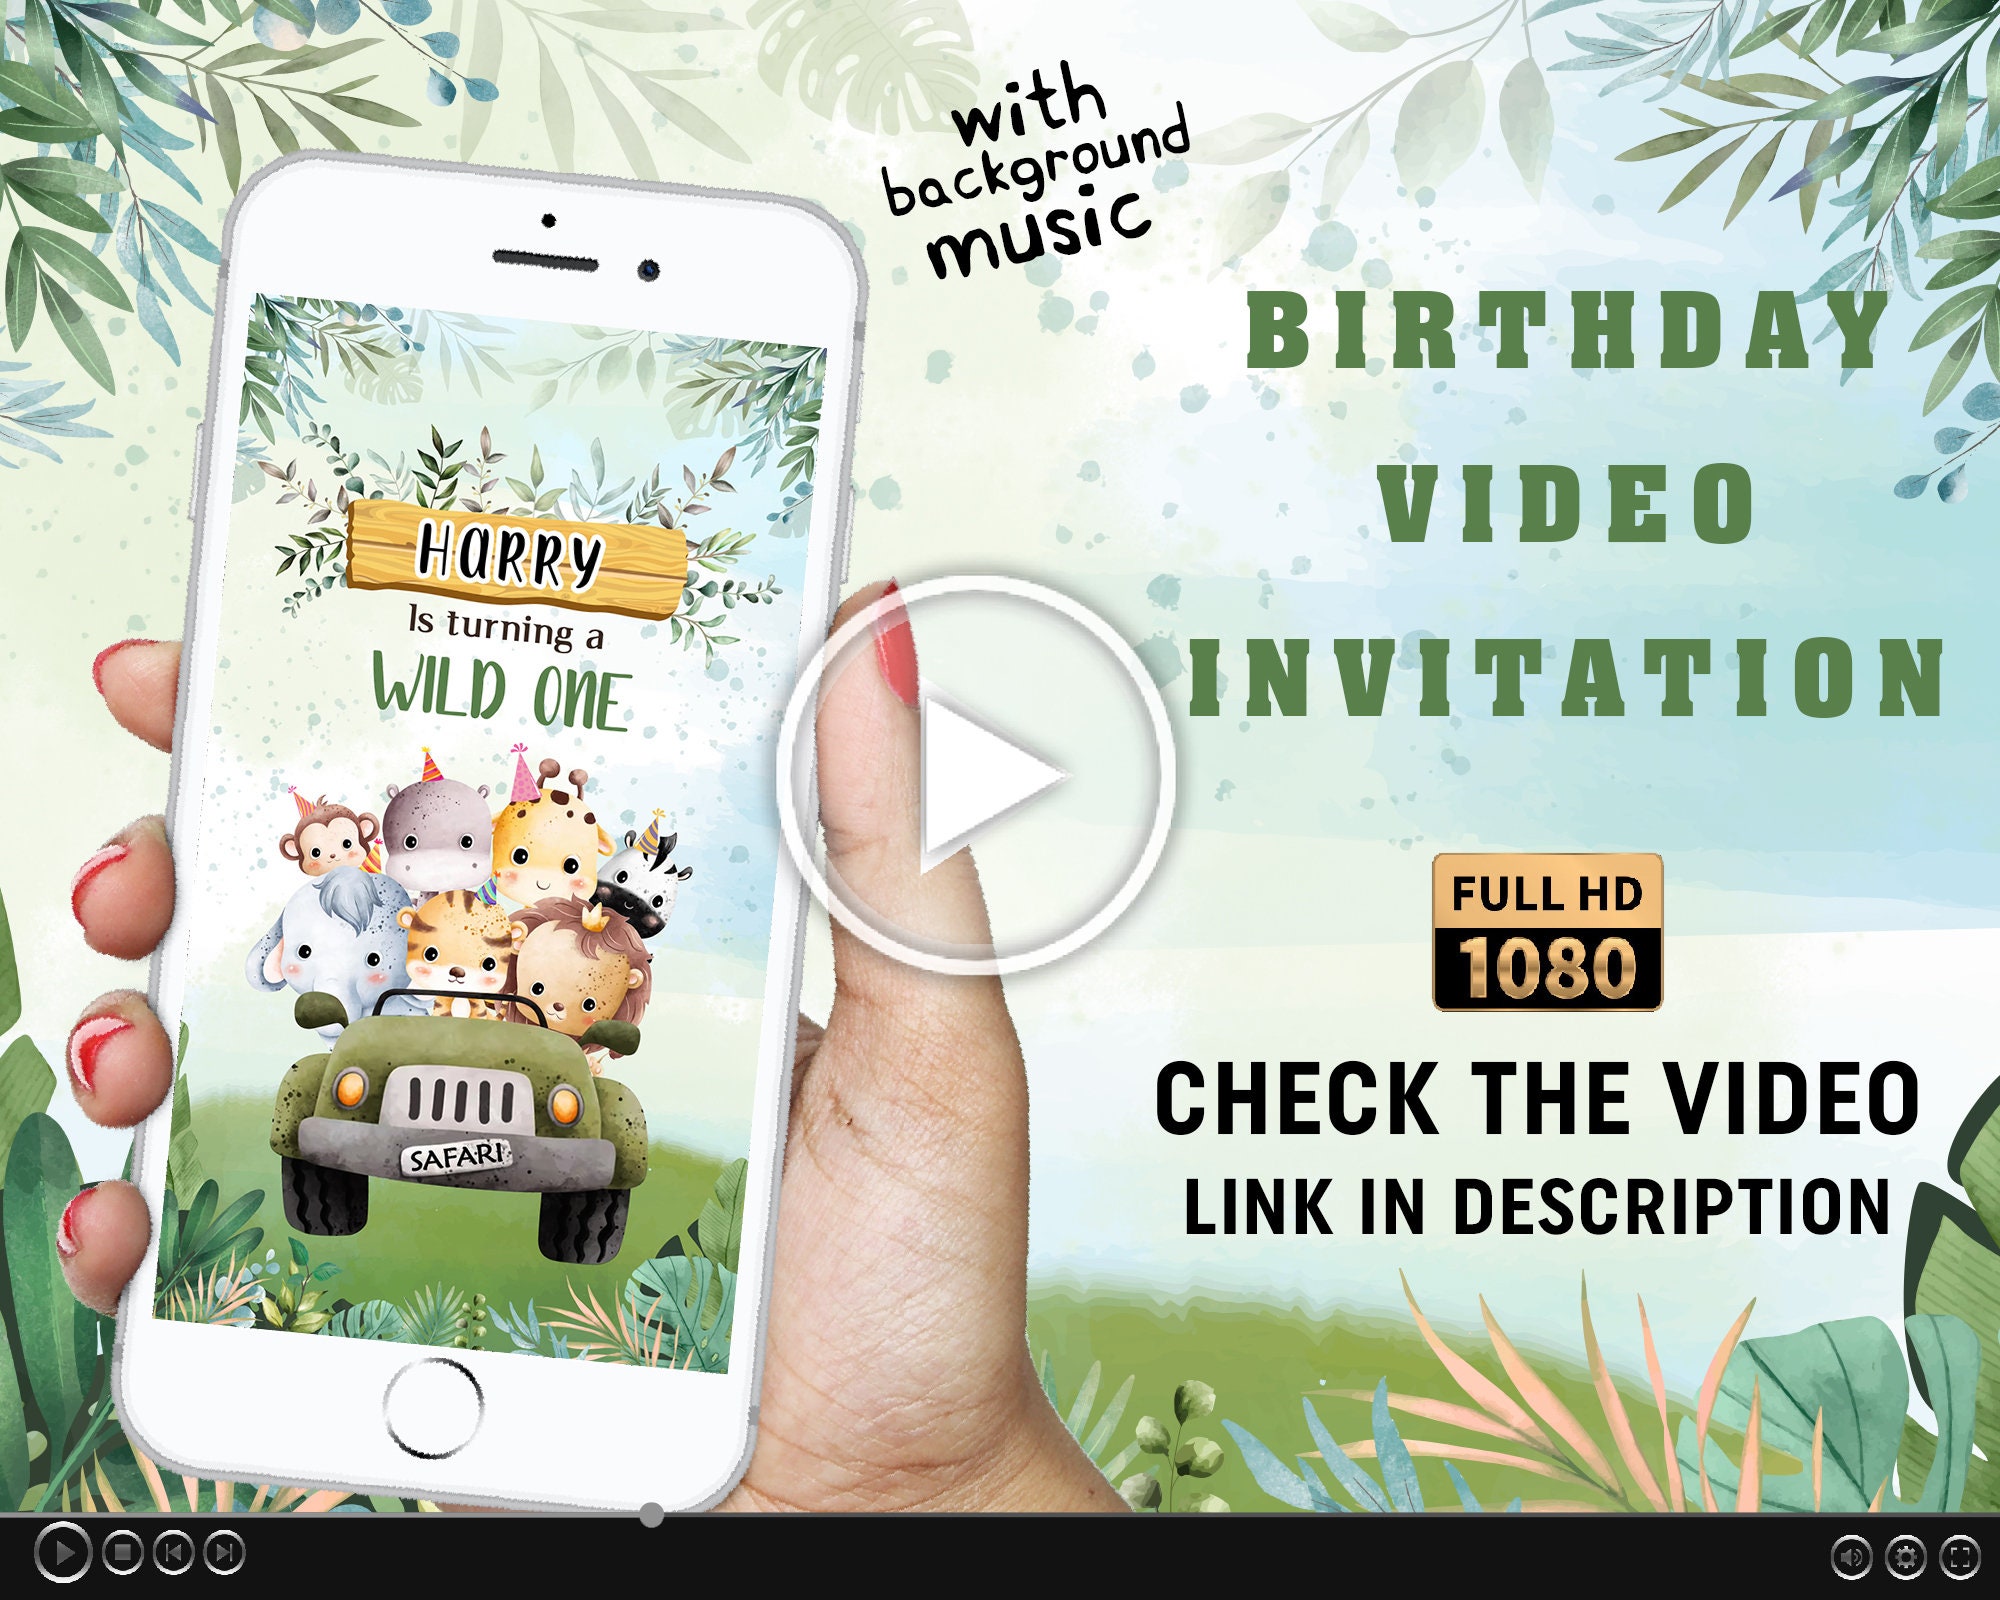 Jungle 2nd Birthday Invitations en Español - Dos - Digital or Printed